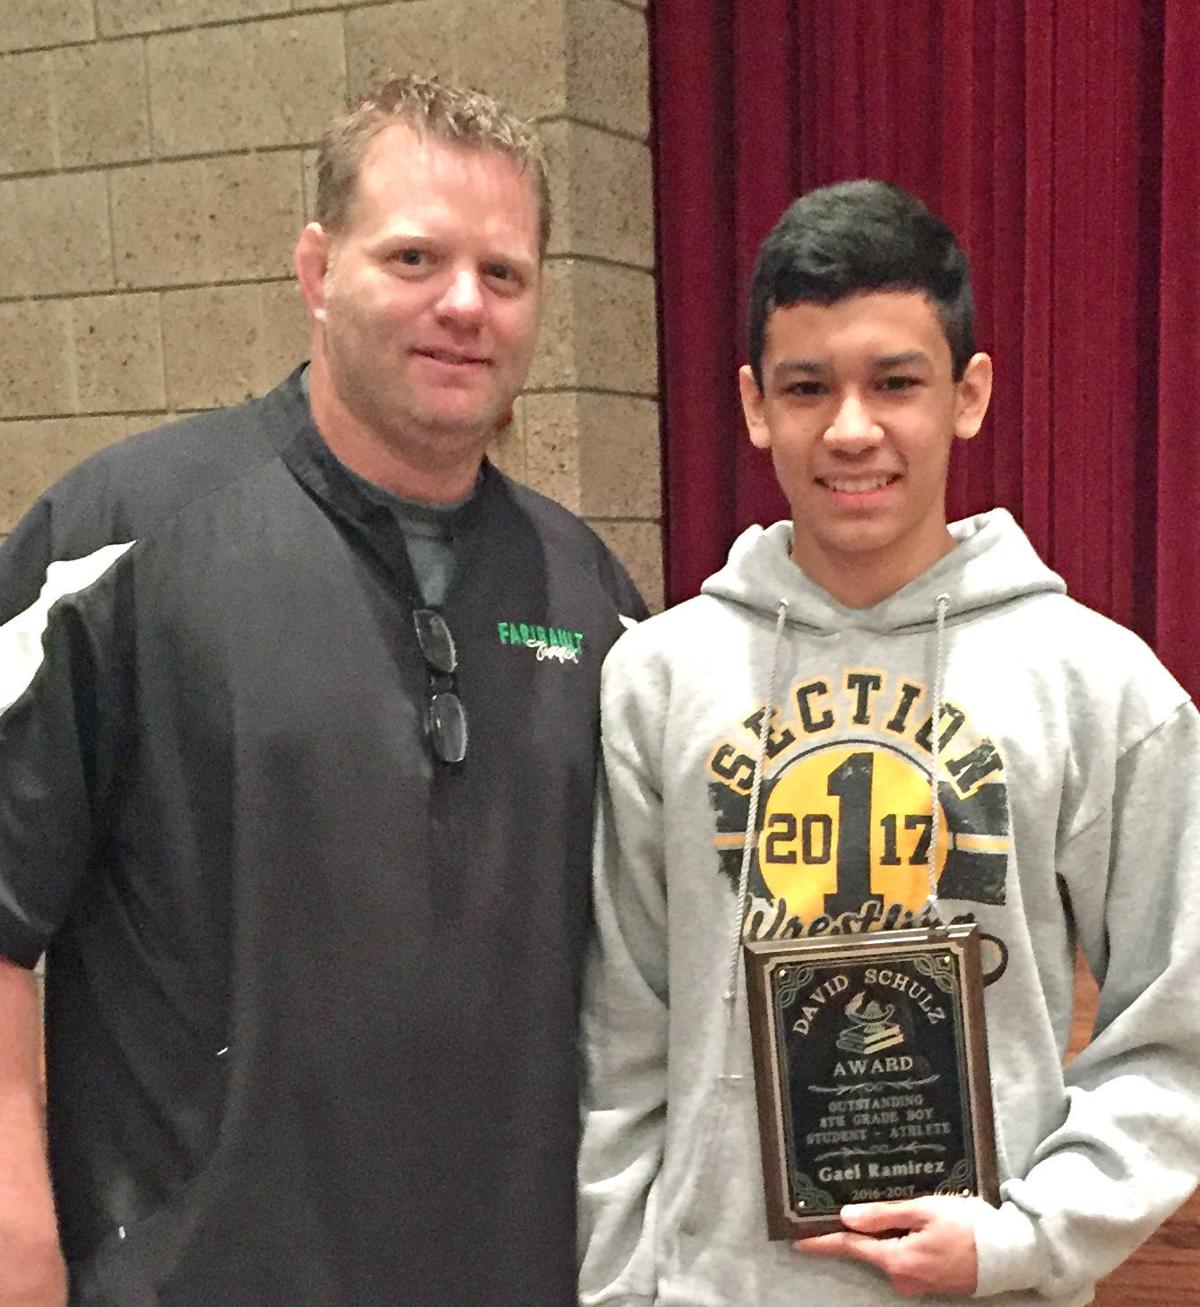 Yetzer, Ramirez earn Outstanding Middle School Student Athlete awards ...